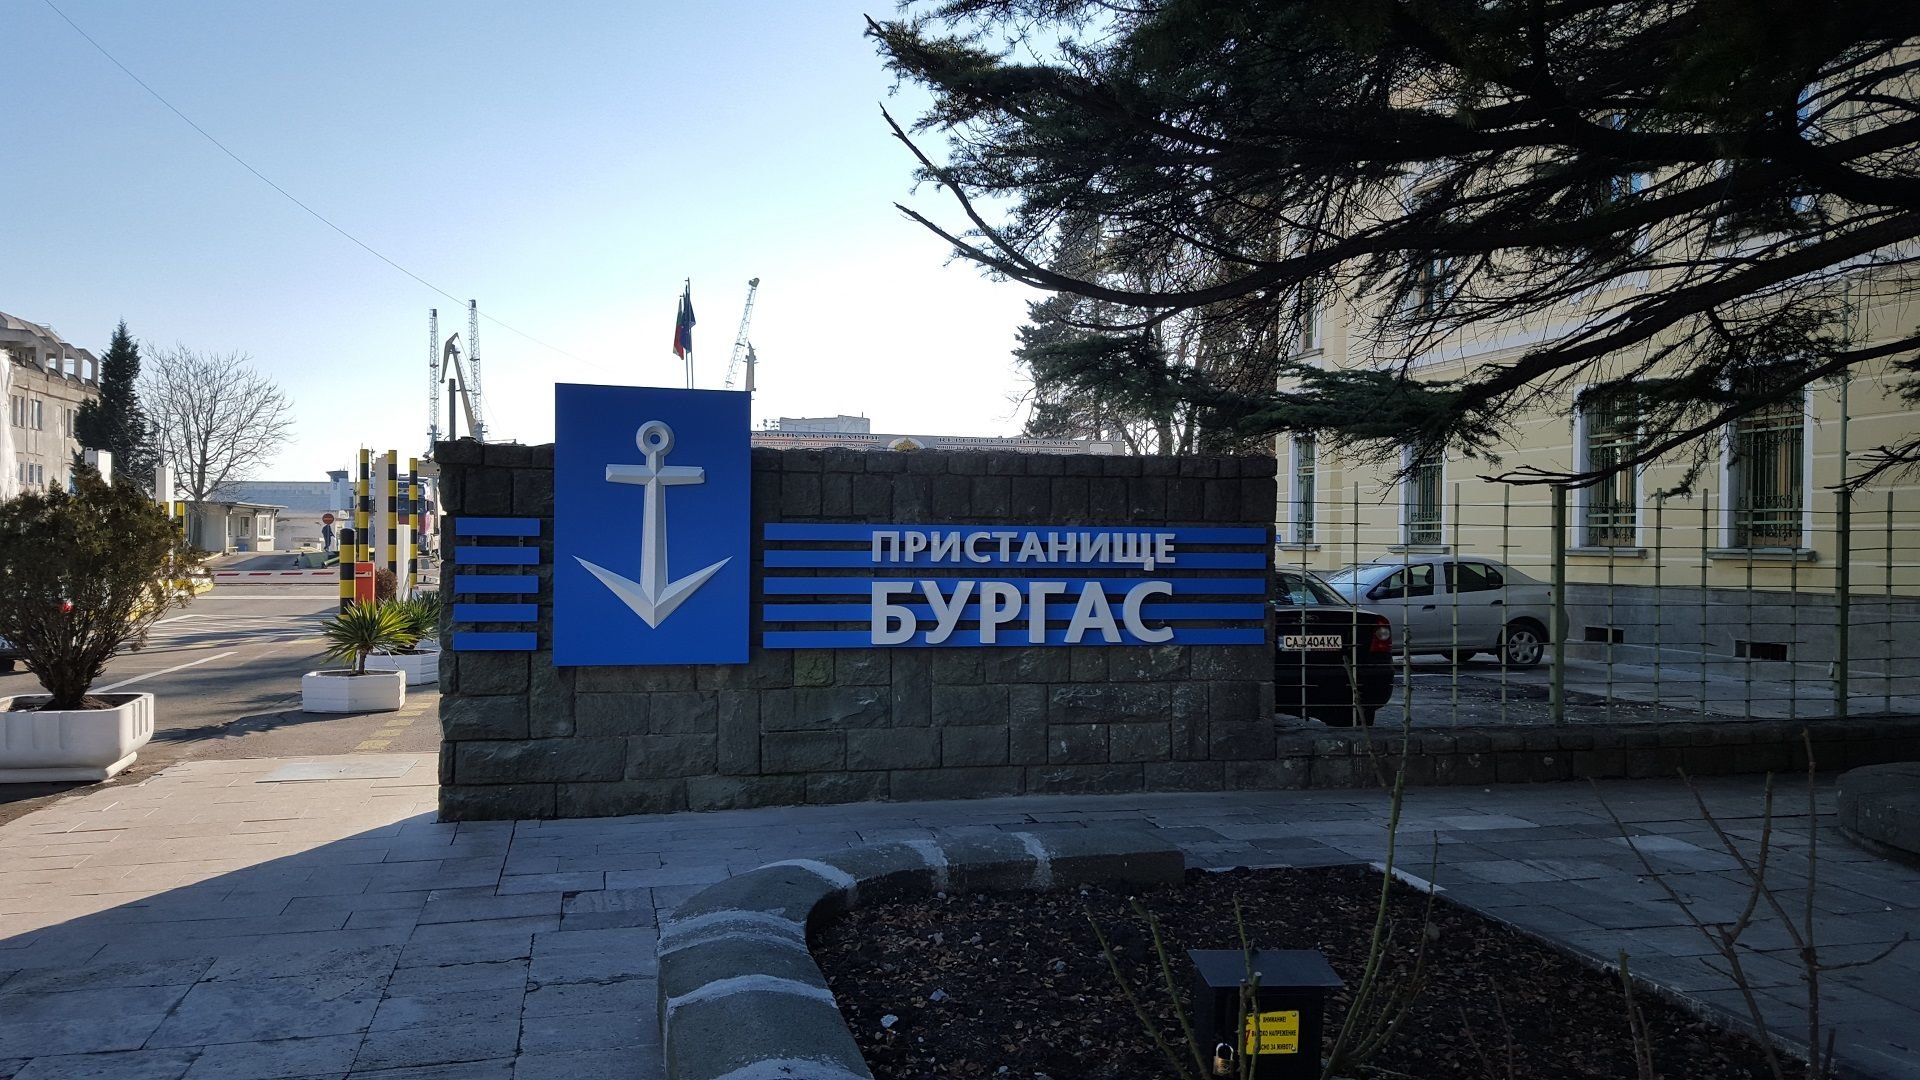 Епидемичен взрив от COVID-19 на кораб на пристанище Бургас установиха здравните